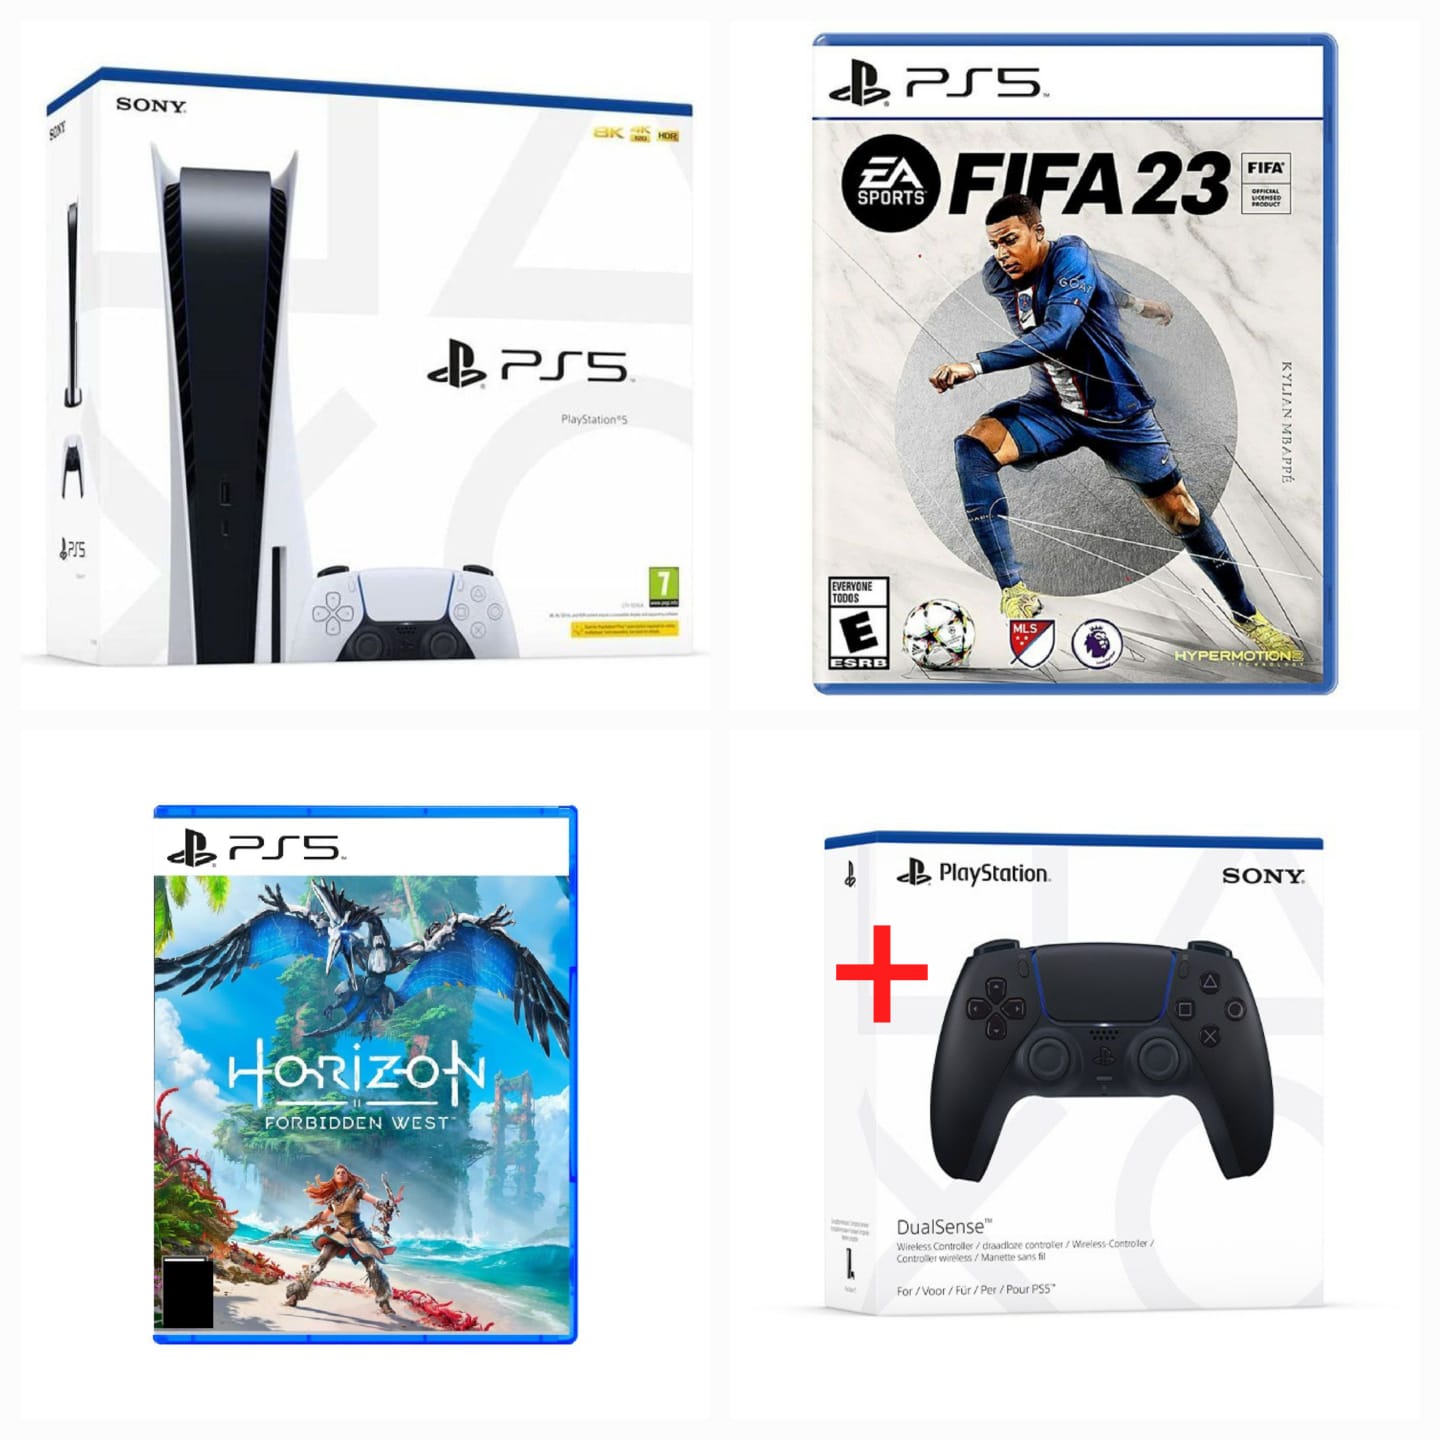 Sony Playstation PS5 -FIFA 23 + Horizon Bundle + DualSense Free Controller, PS5-266154 